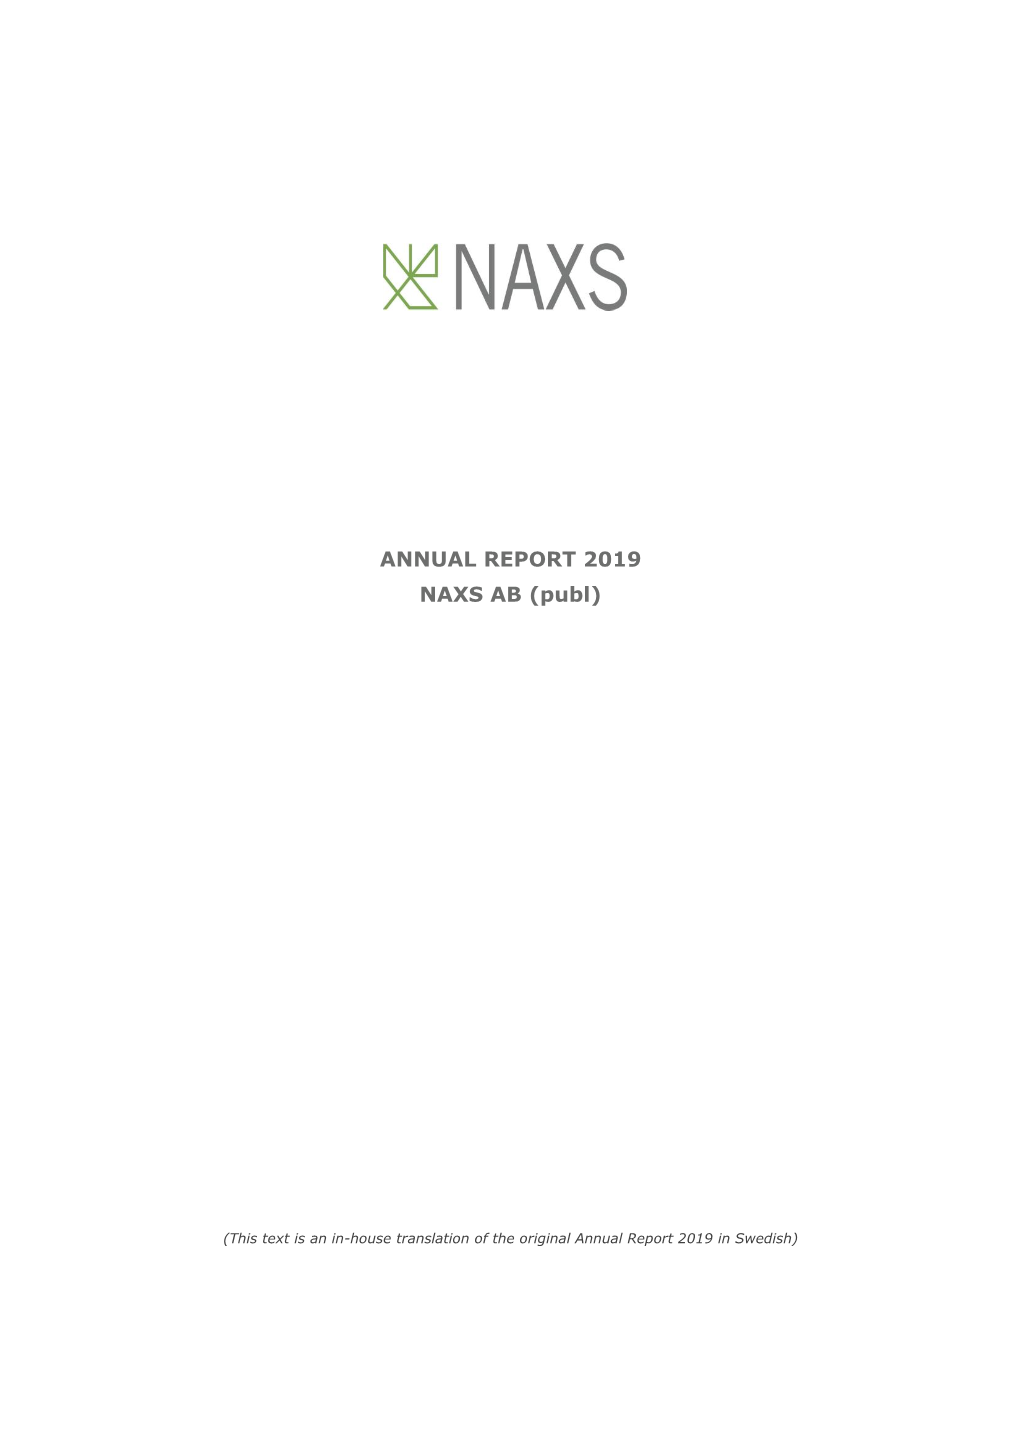 ANNUAL REPORT 2019 NAXS AB (Publ)